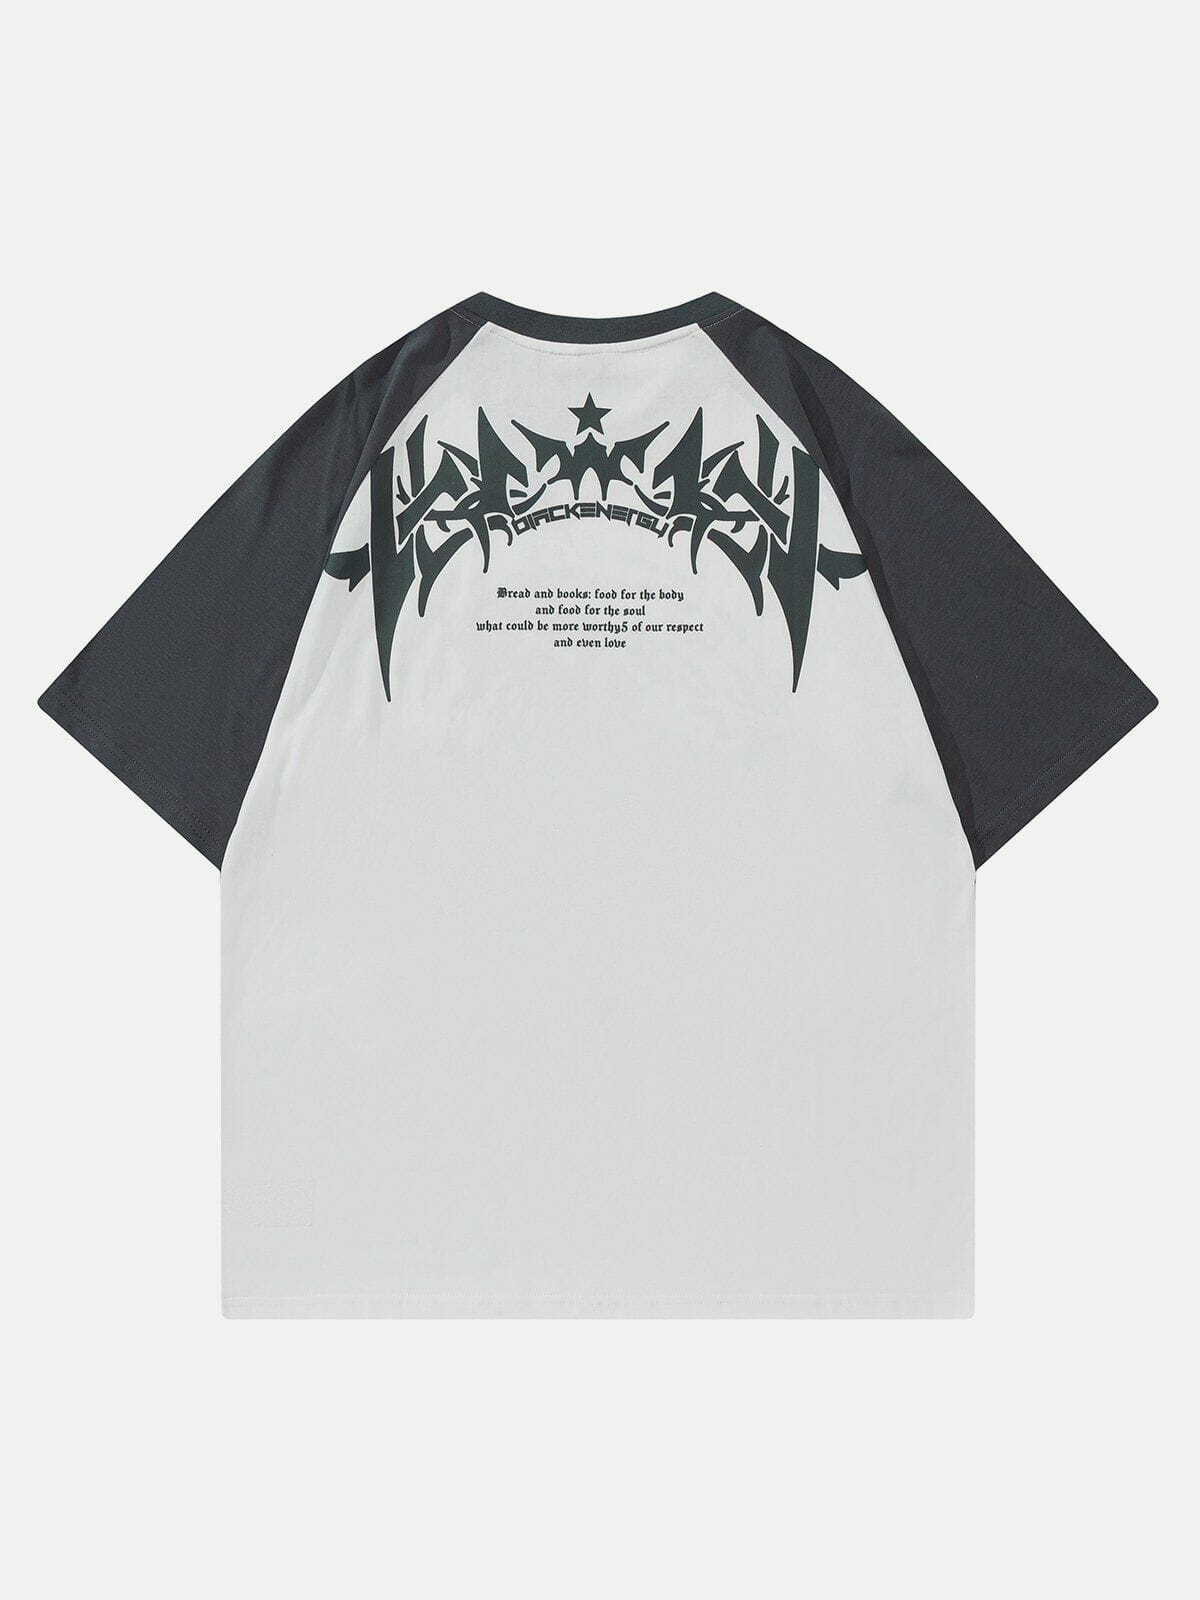 gothic star print tee edgy streetwear statement 6812